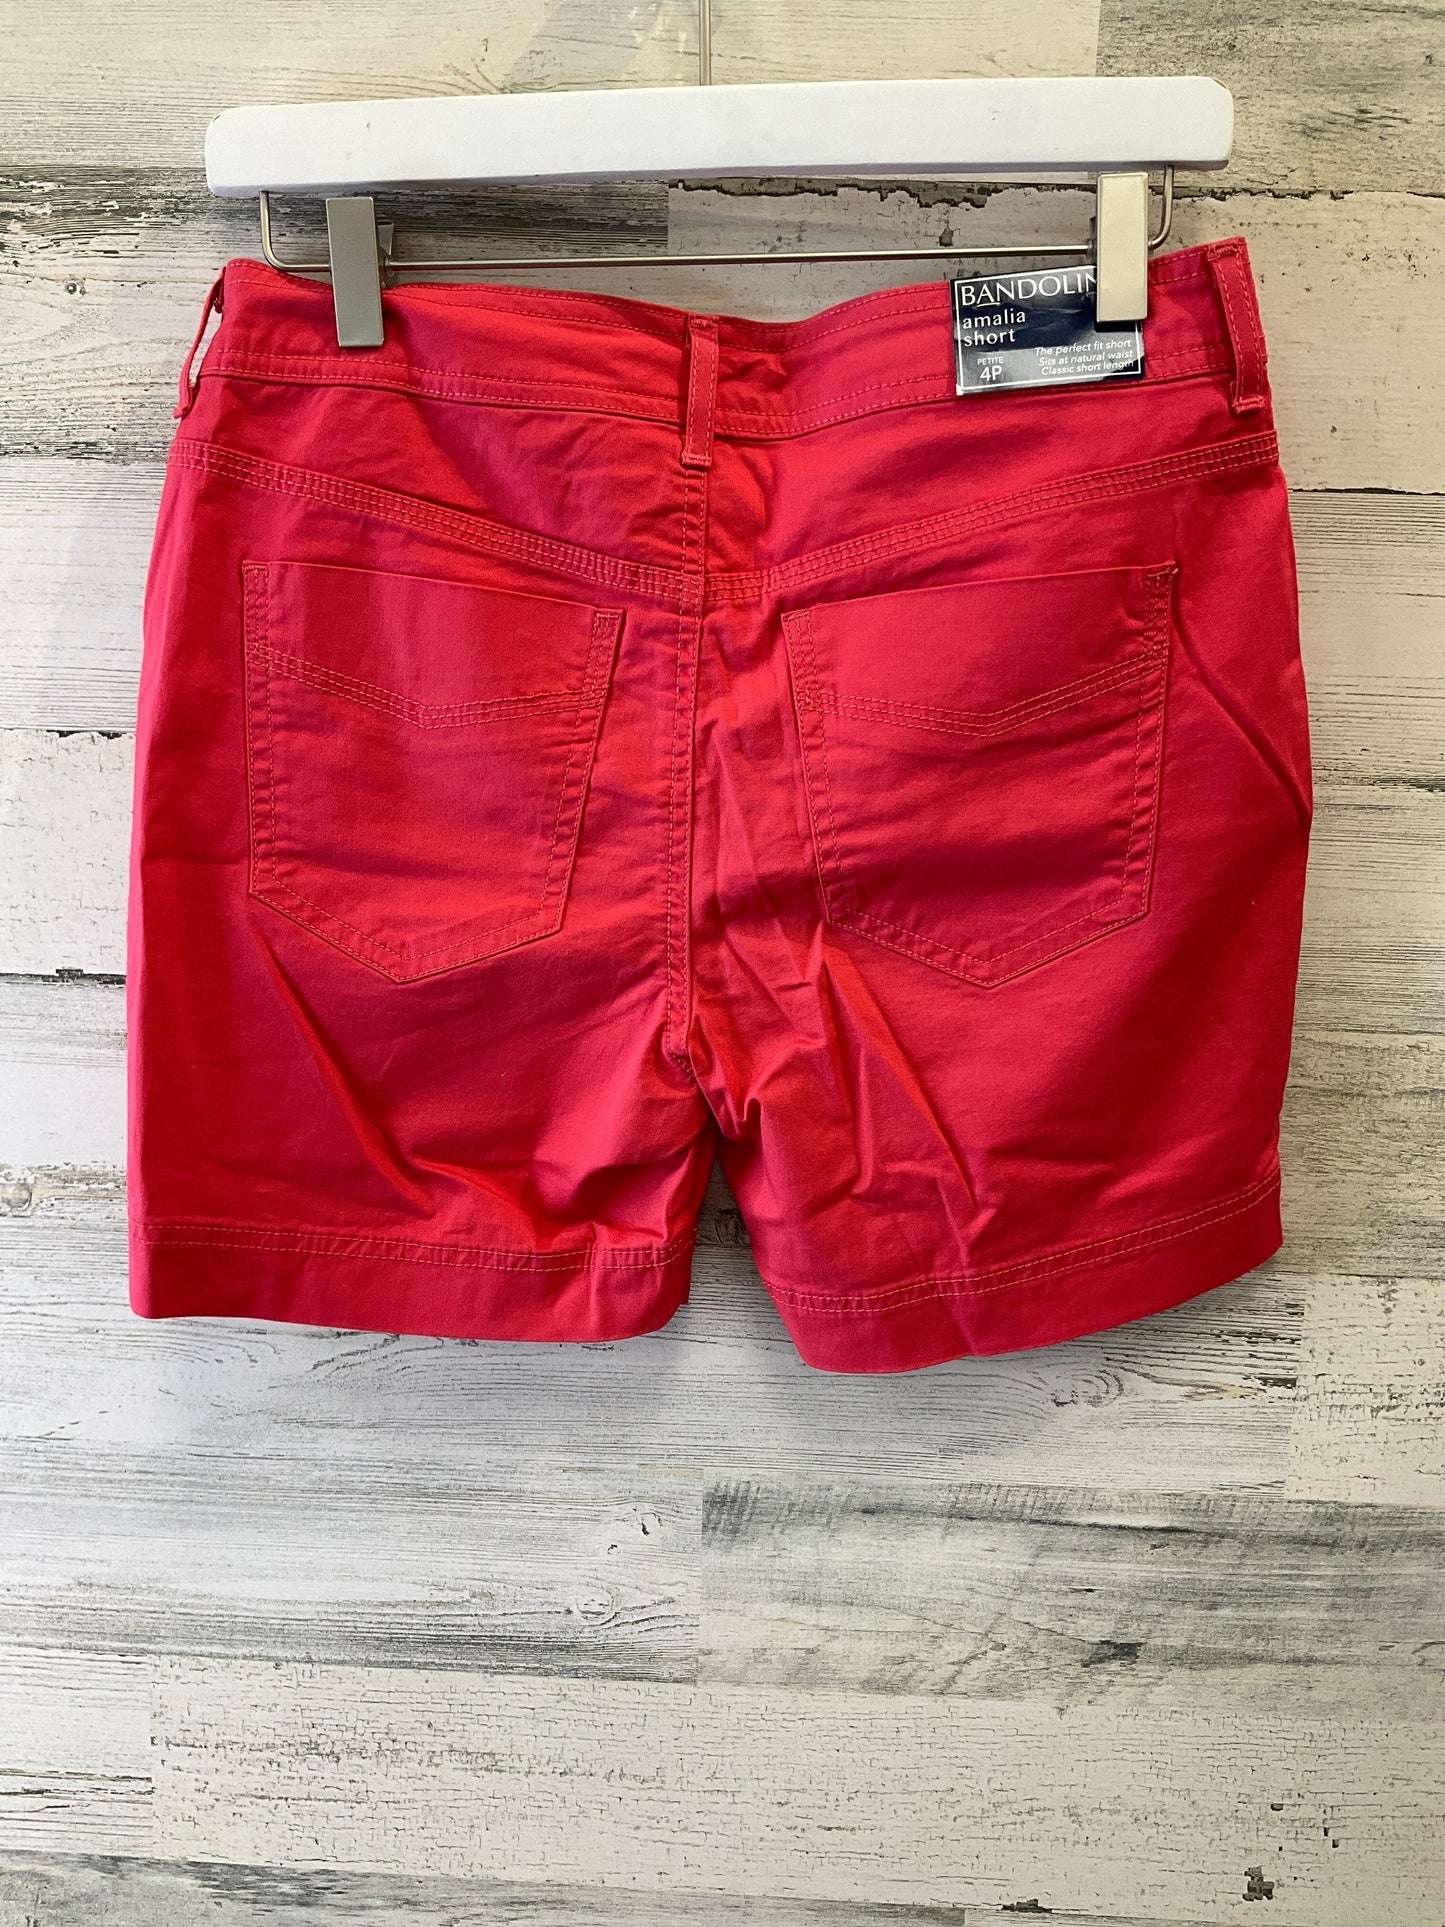 Coral Shorts Bandolino, Size 4petite